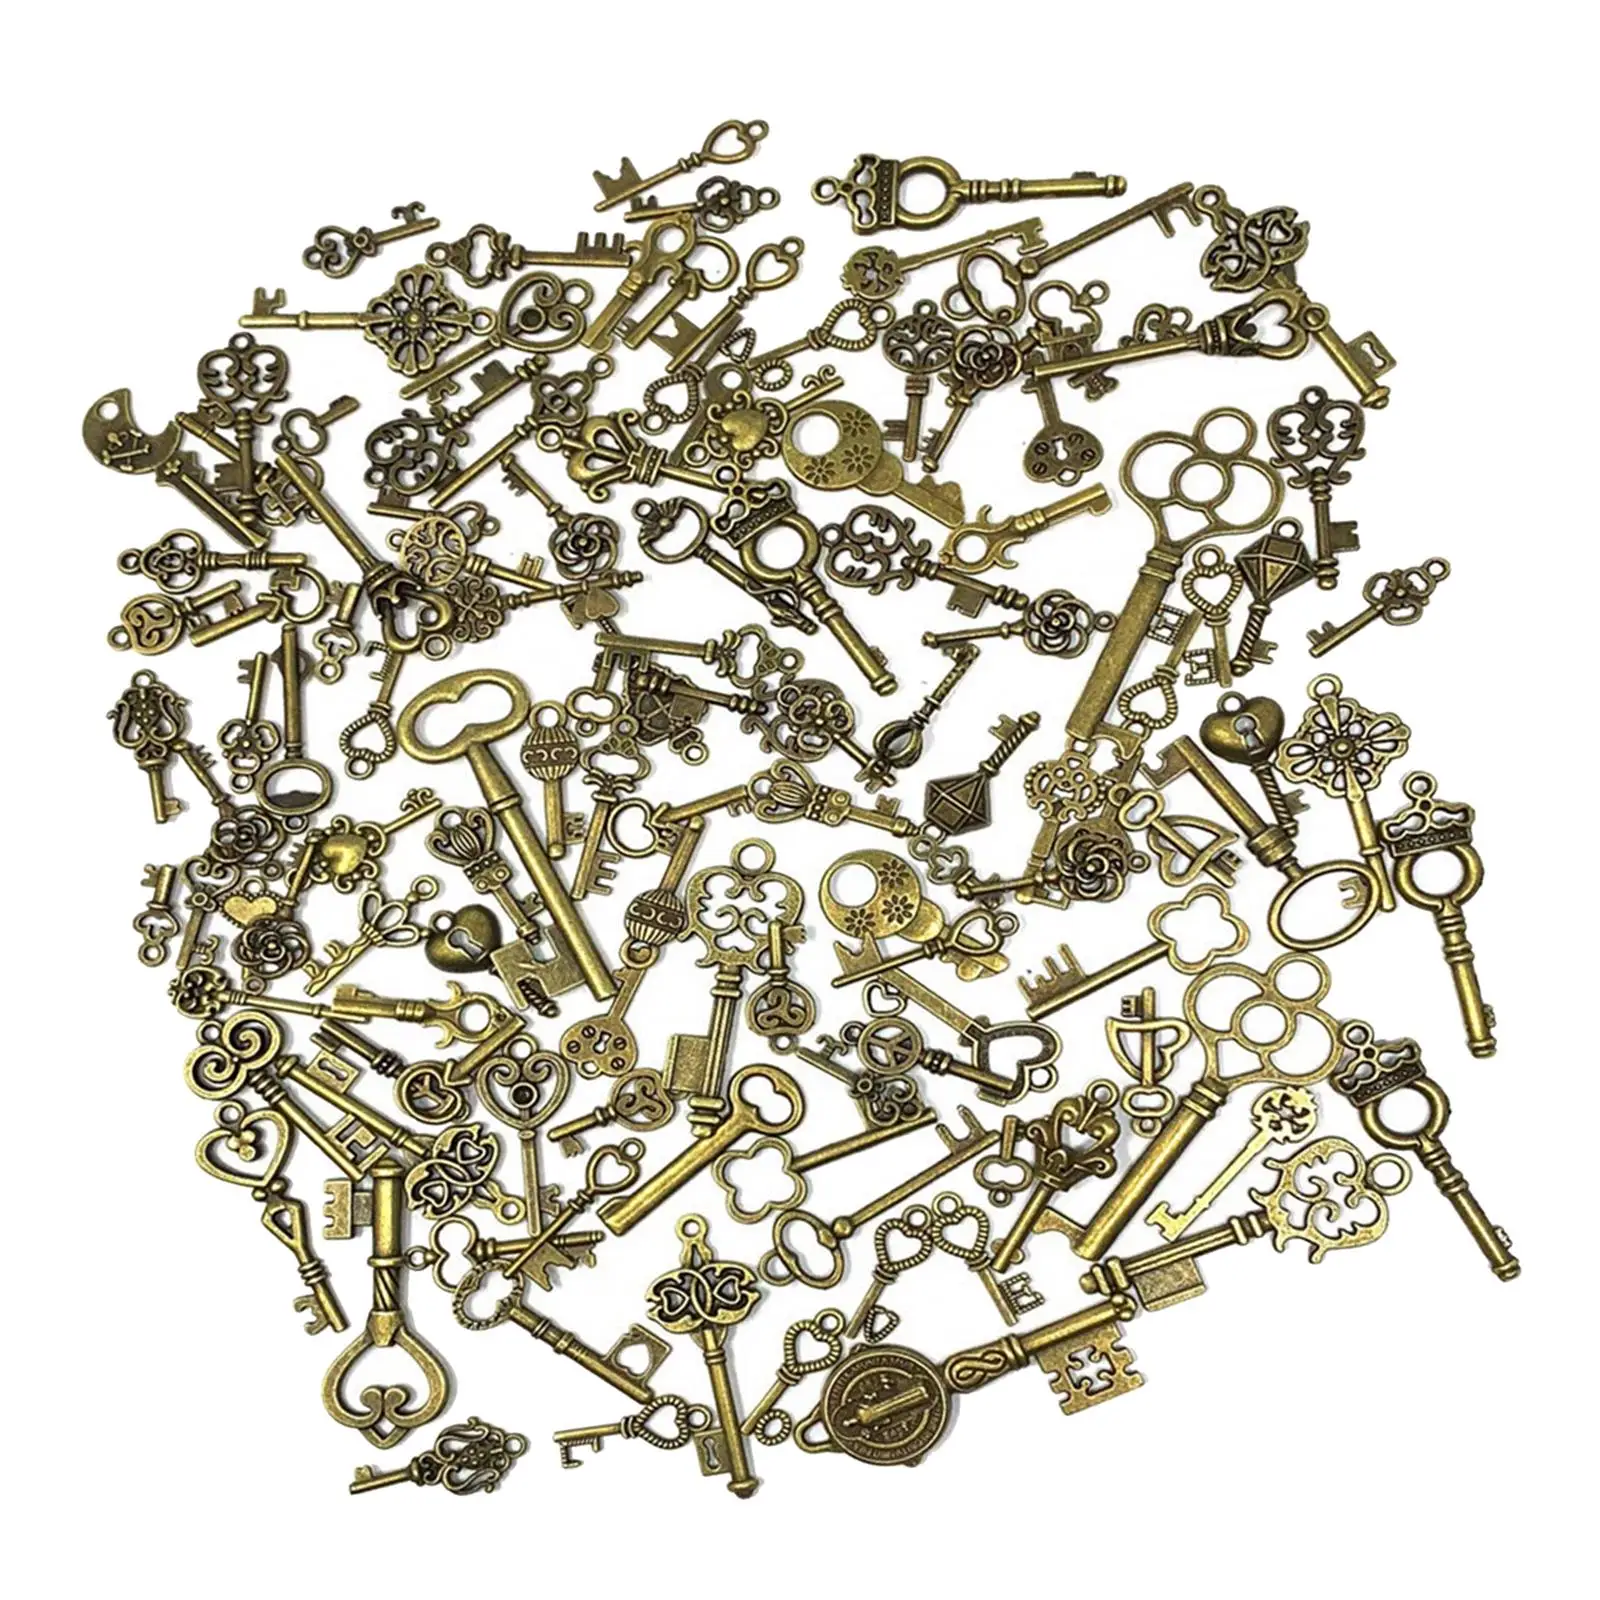 

125Pcs Vintage Style Skeleton Key Set Charms Bronze Zinc Alloy for Scrapbook Decoration Necklace Jewelry Making Craft Projects